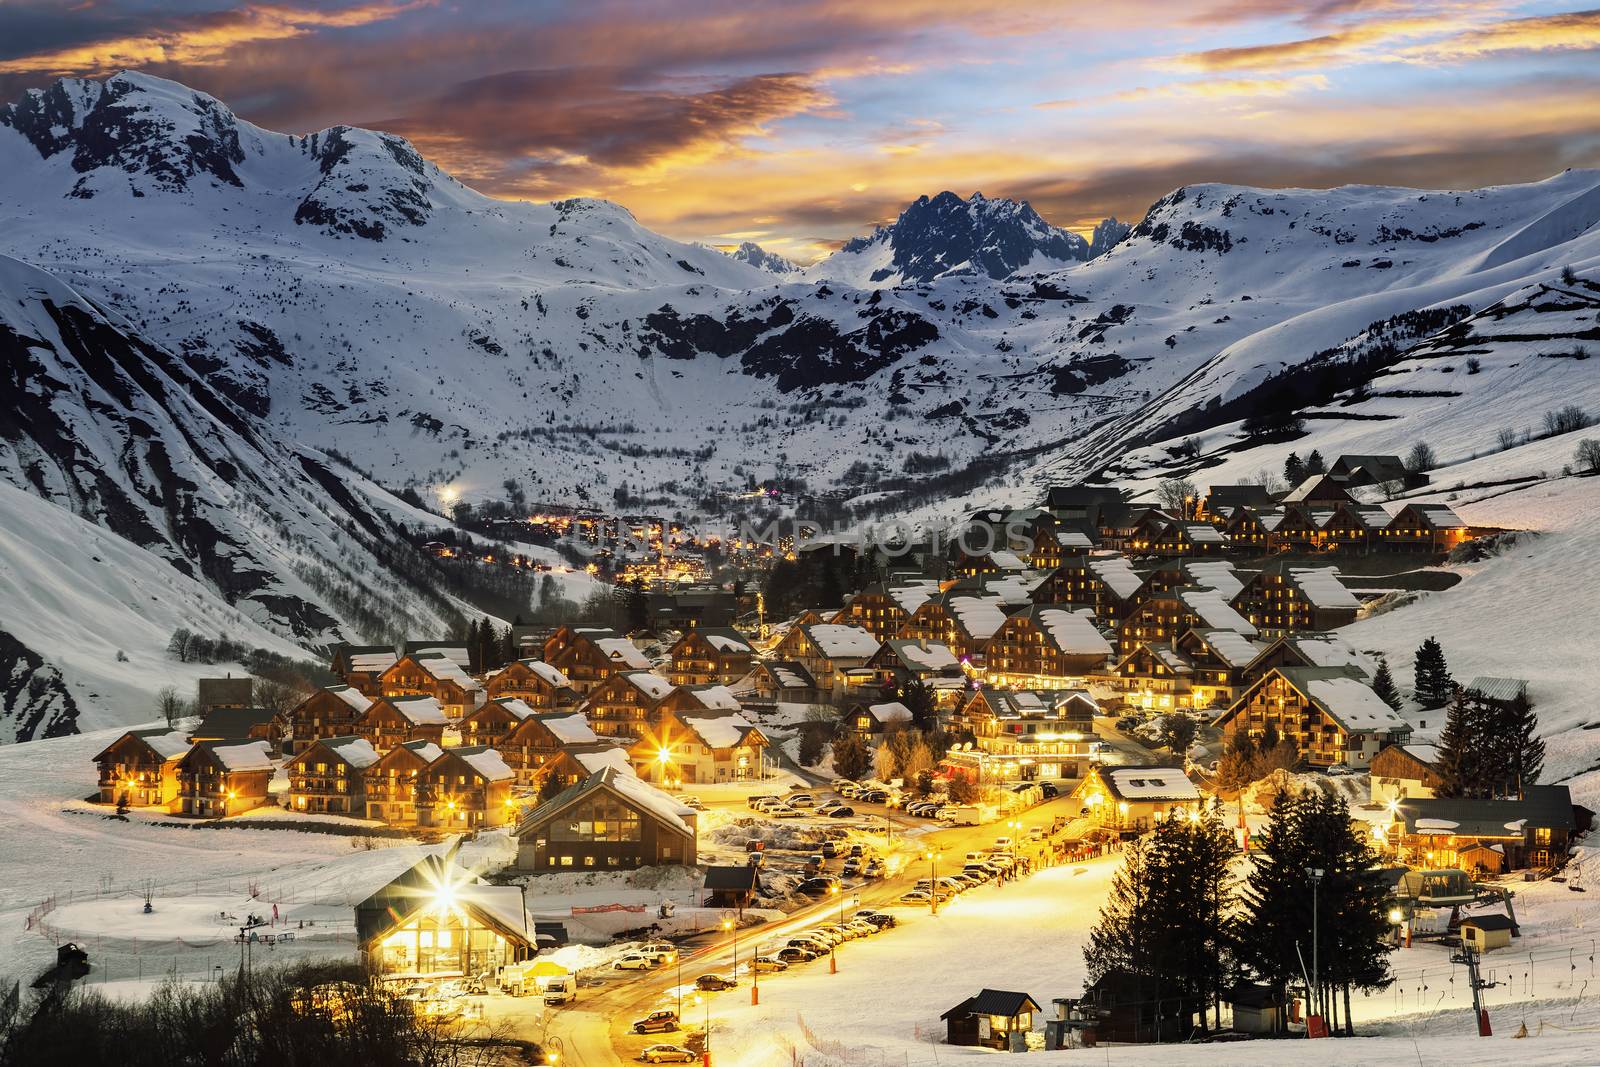 Evening landscape and ski resort in French Alps,Saint jean d'Arves, France 